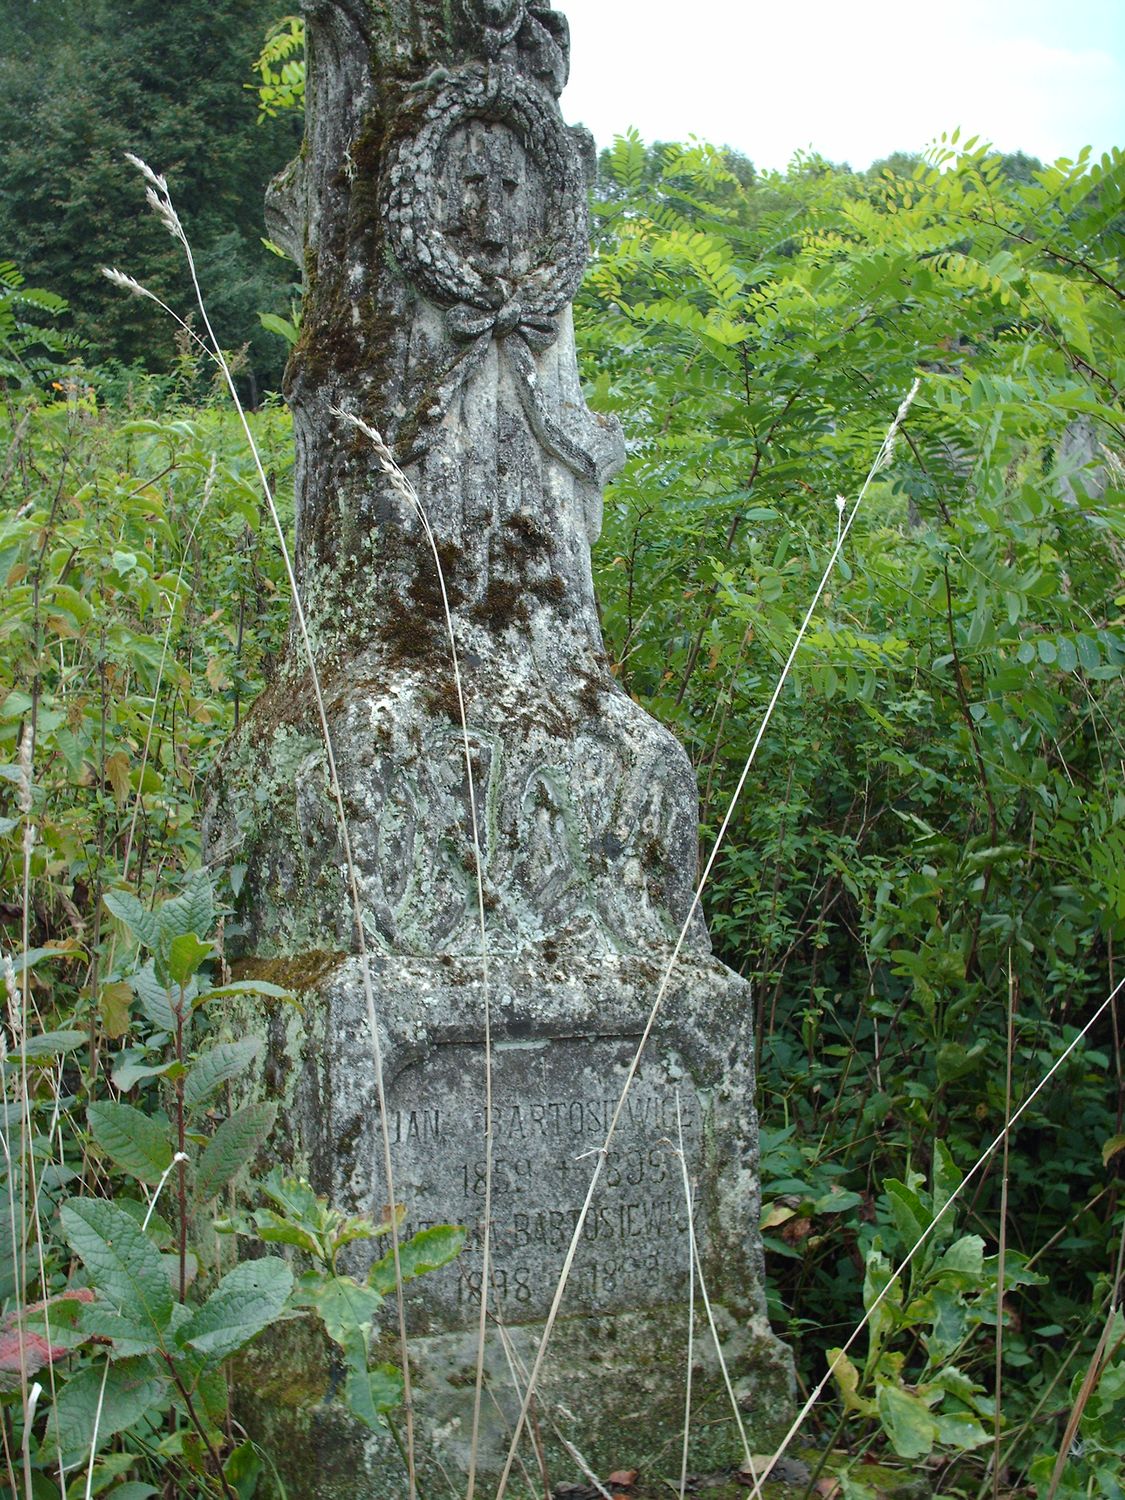 Tombstone of Jan and Natalia Bartosiewicz from the cemetery in Monasterzyska, state from 2007